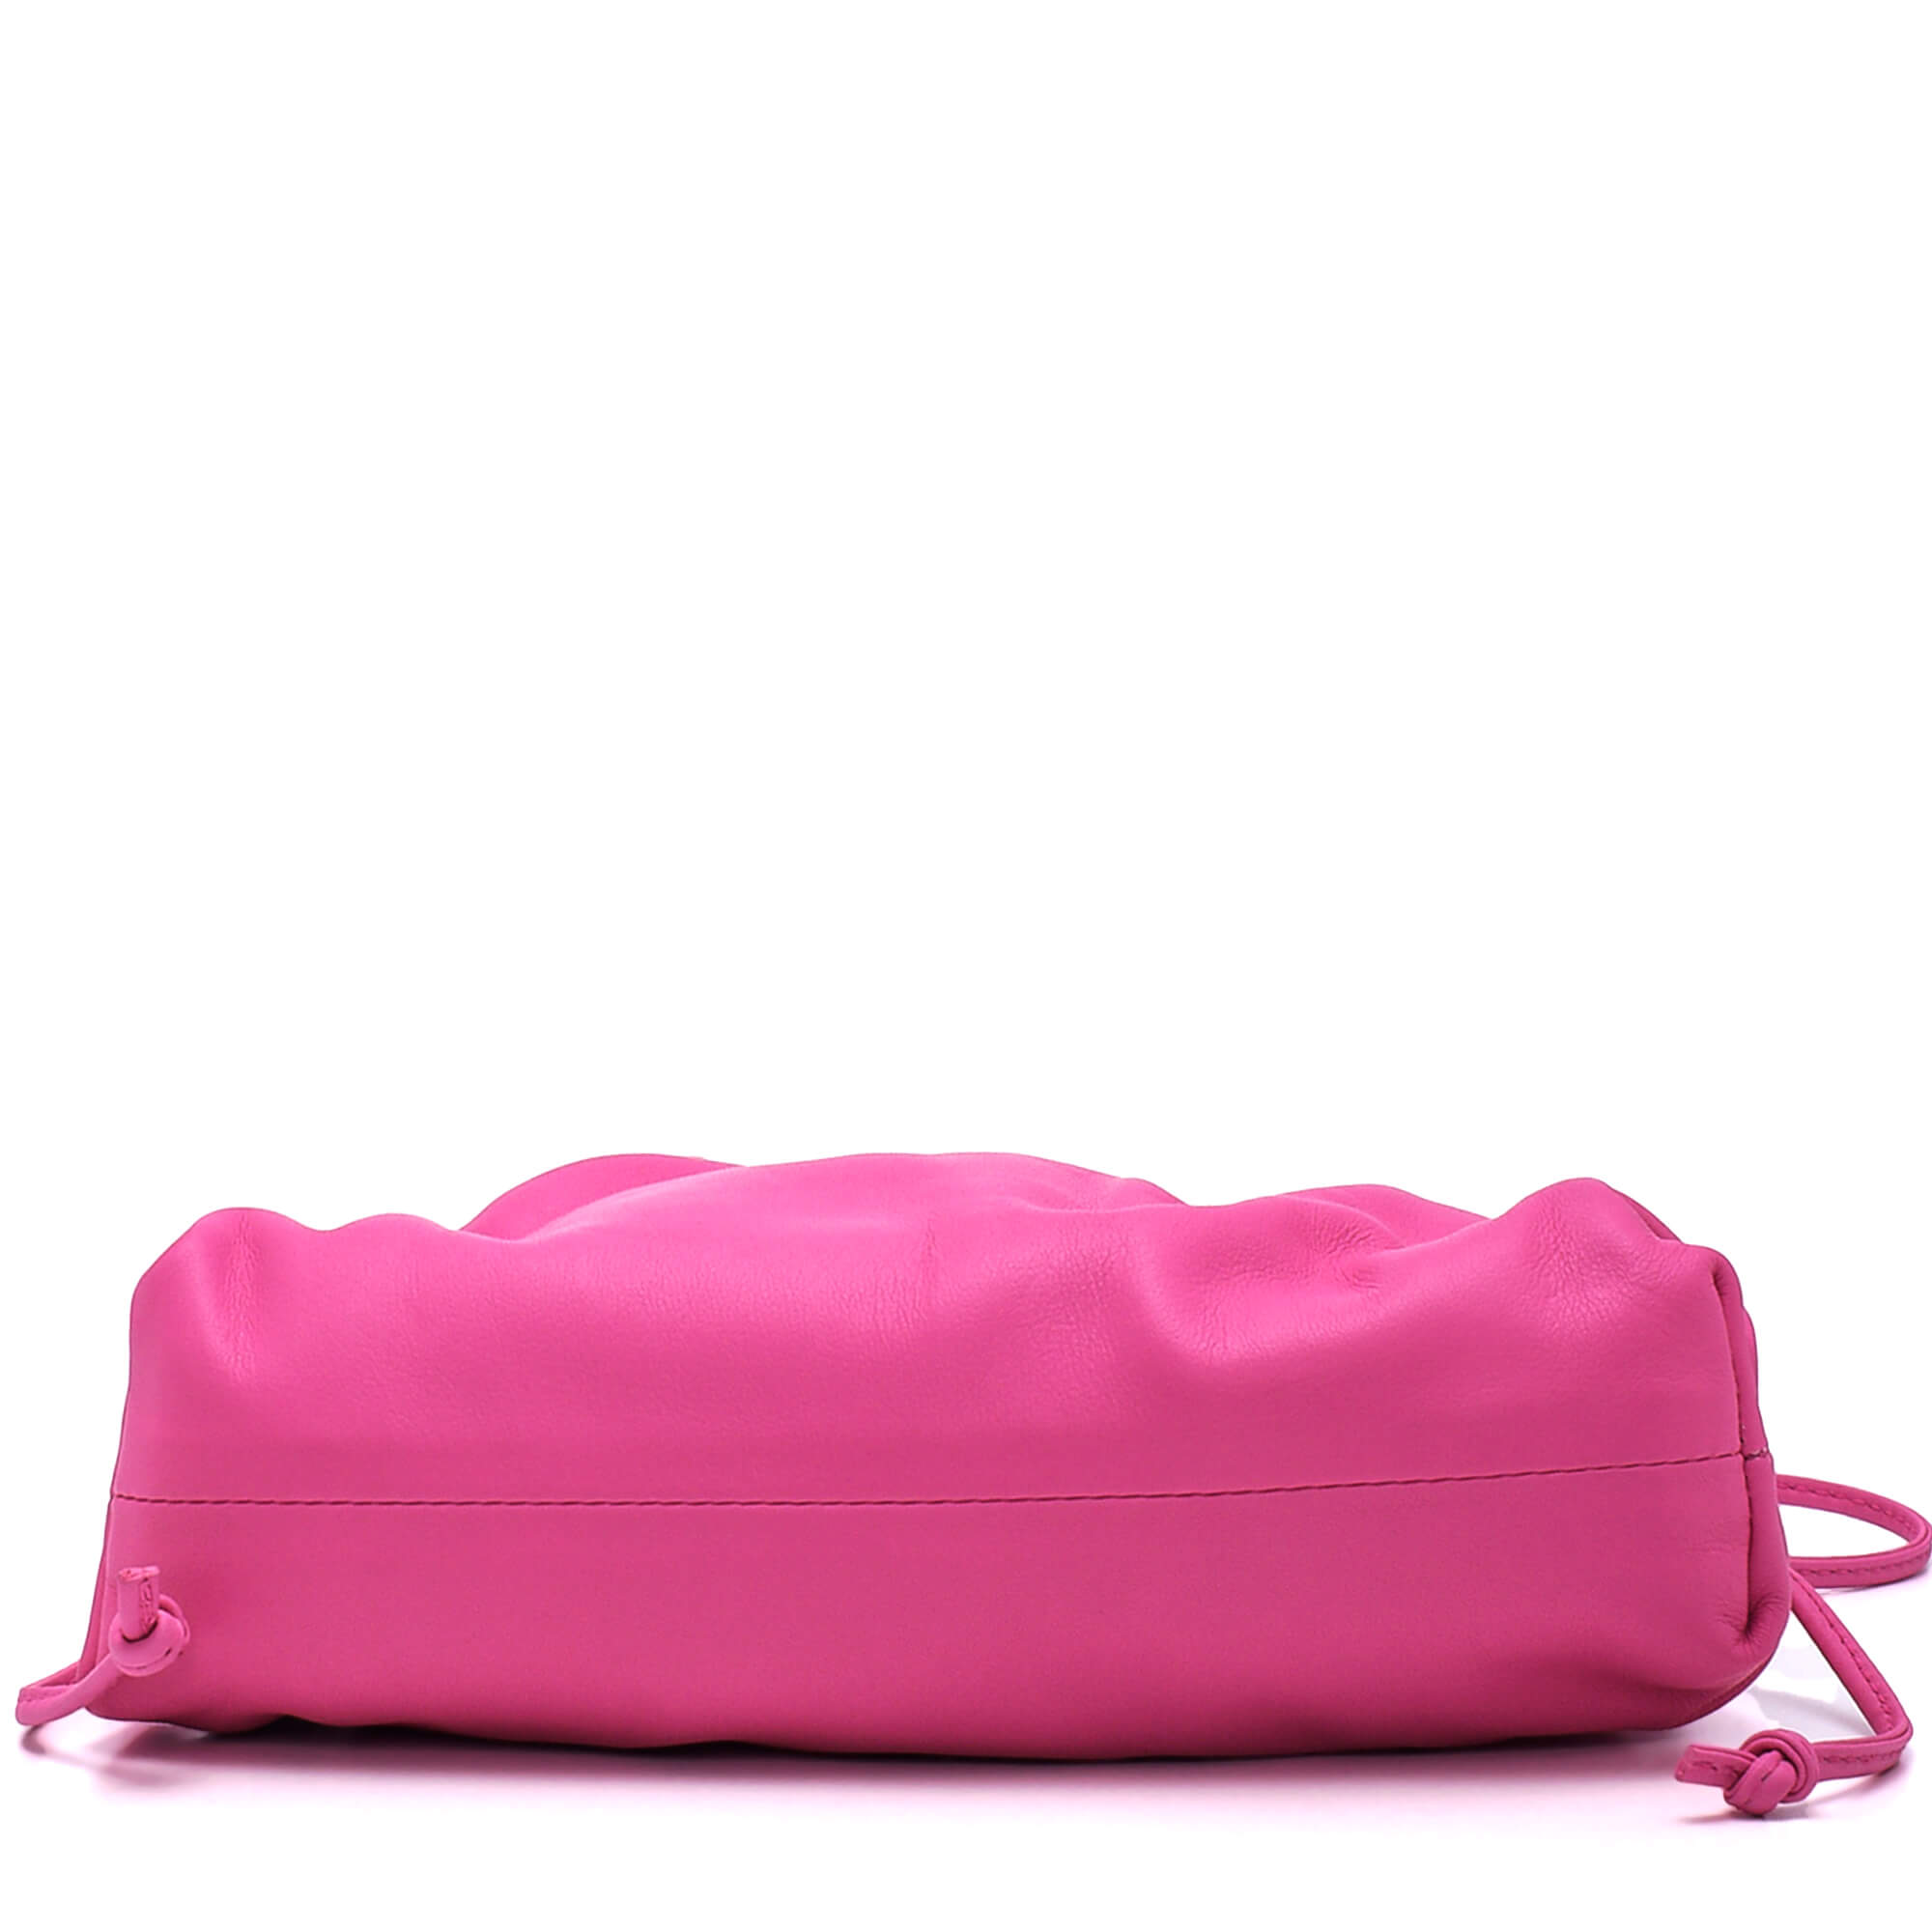 Bottega Veneta - Pink Leather Teen Pouch